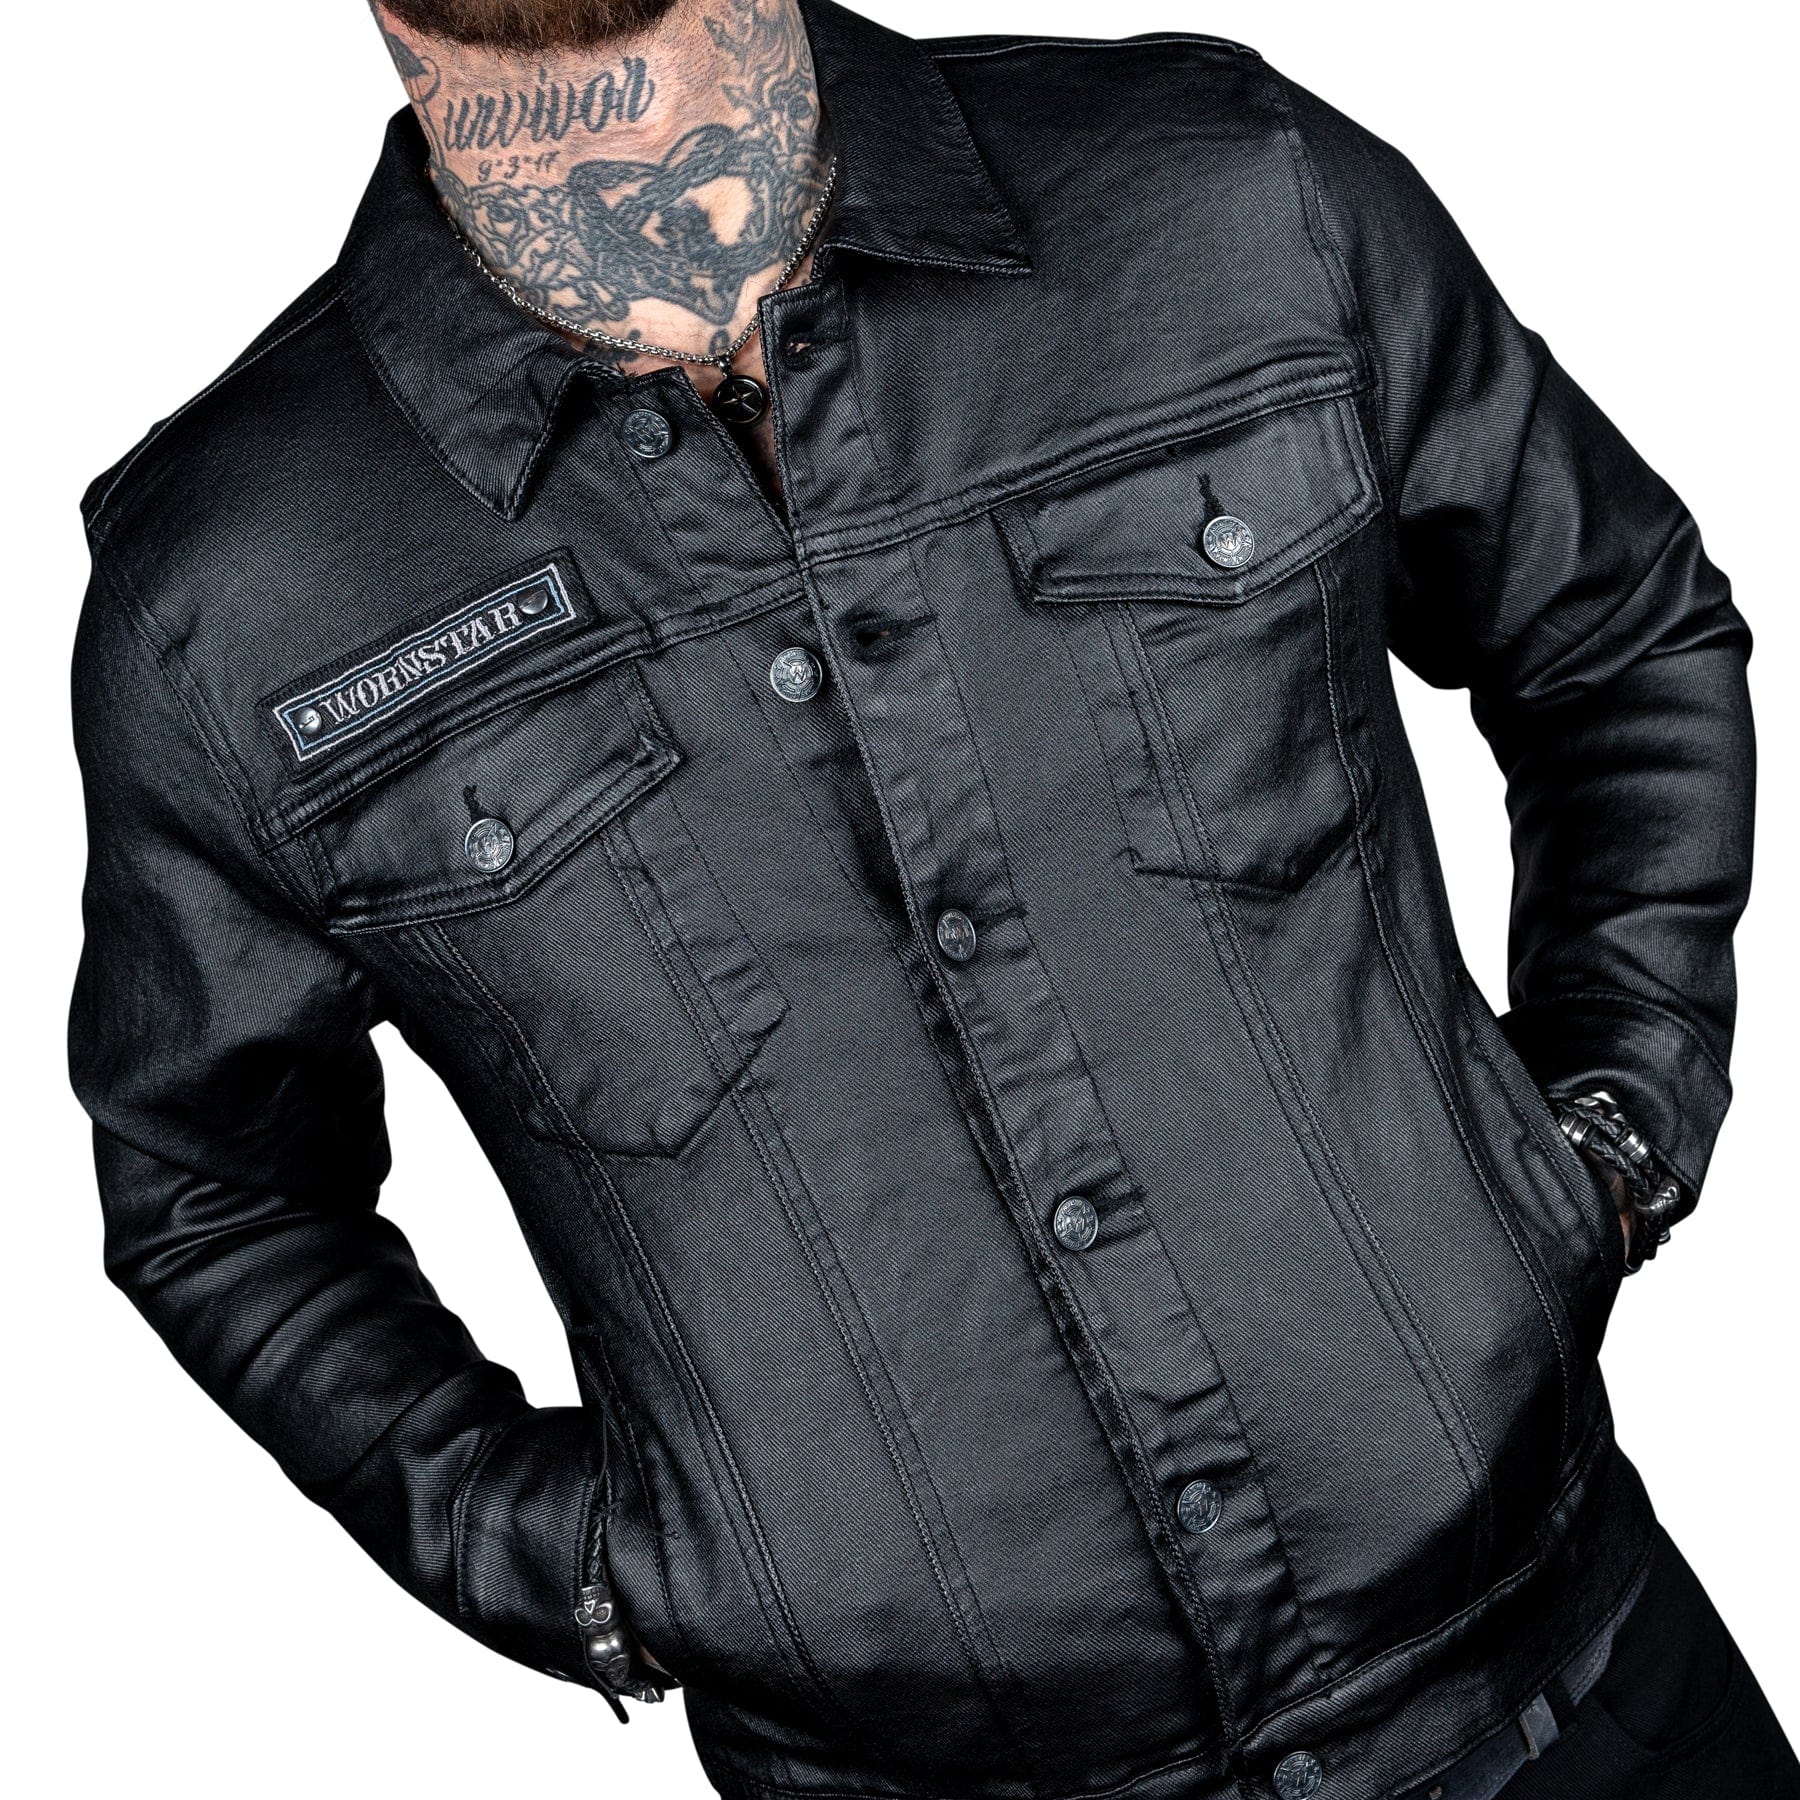 Wornstar Clothing Mens Jacket. Idolmaker Waxed Denim Jacket - Black